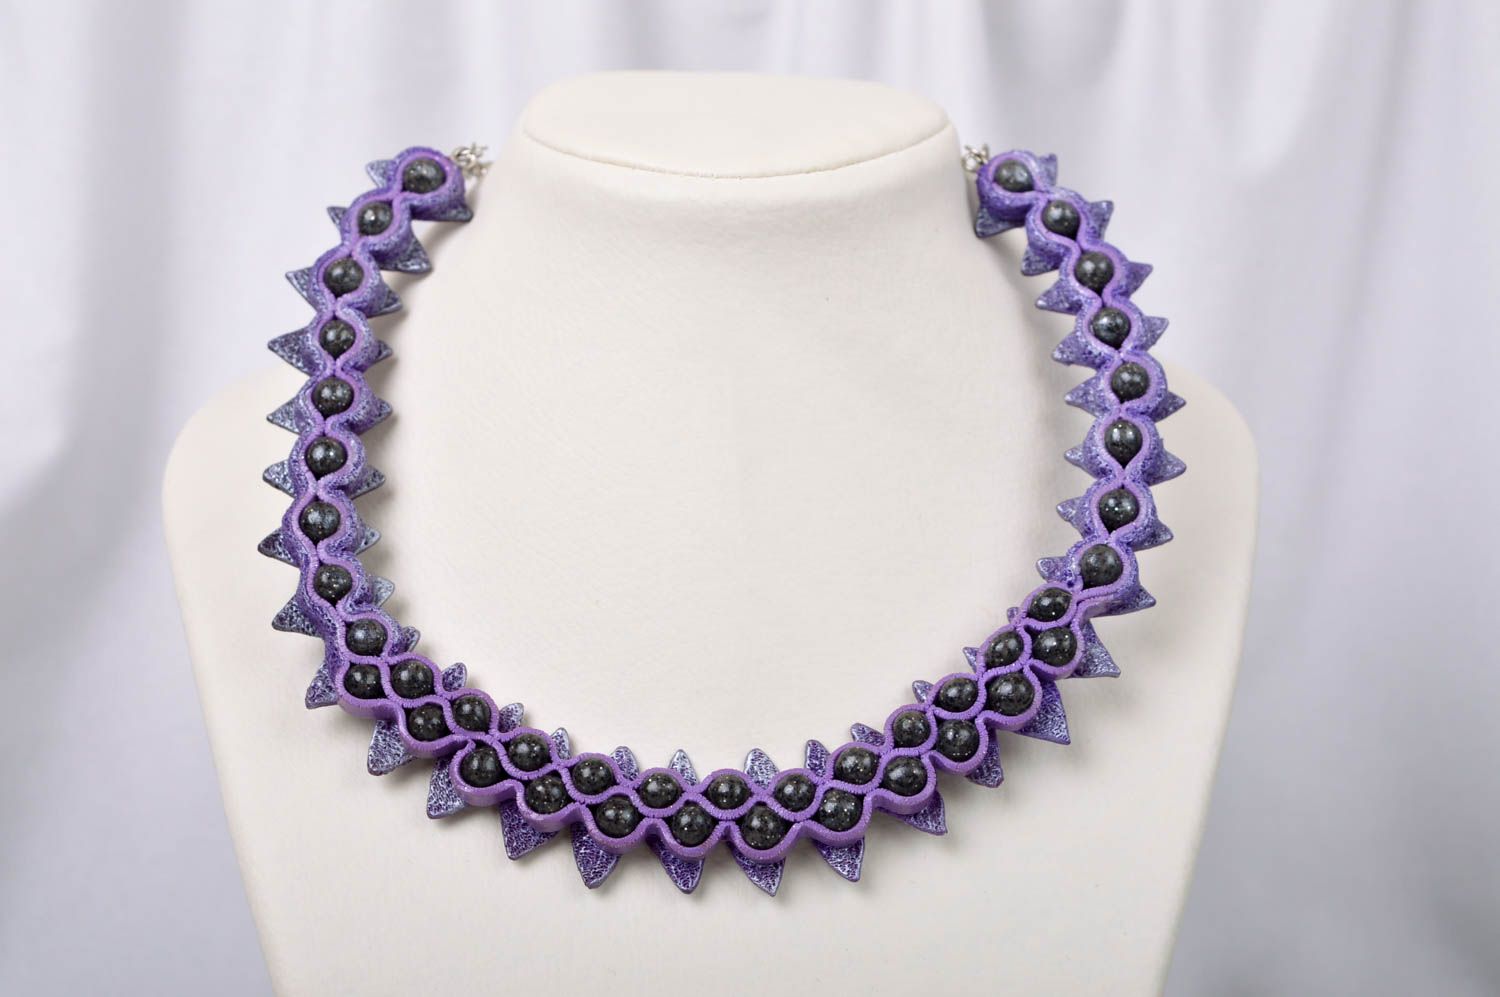 Handmade stylish necklace elegant designer necklace gift ideas for her photo 1